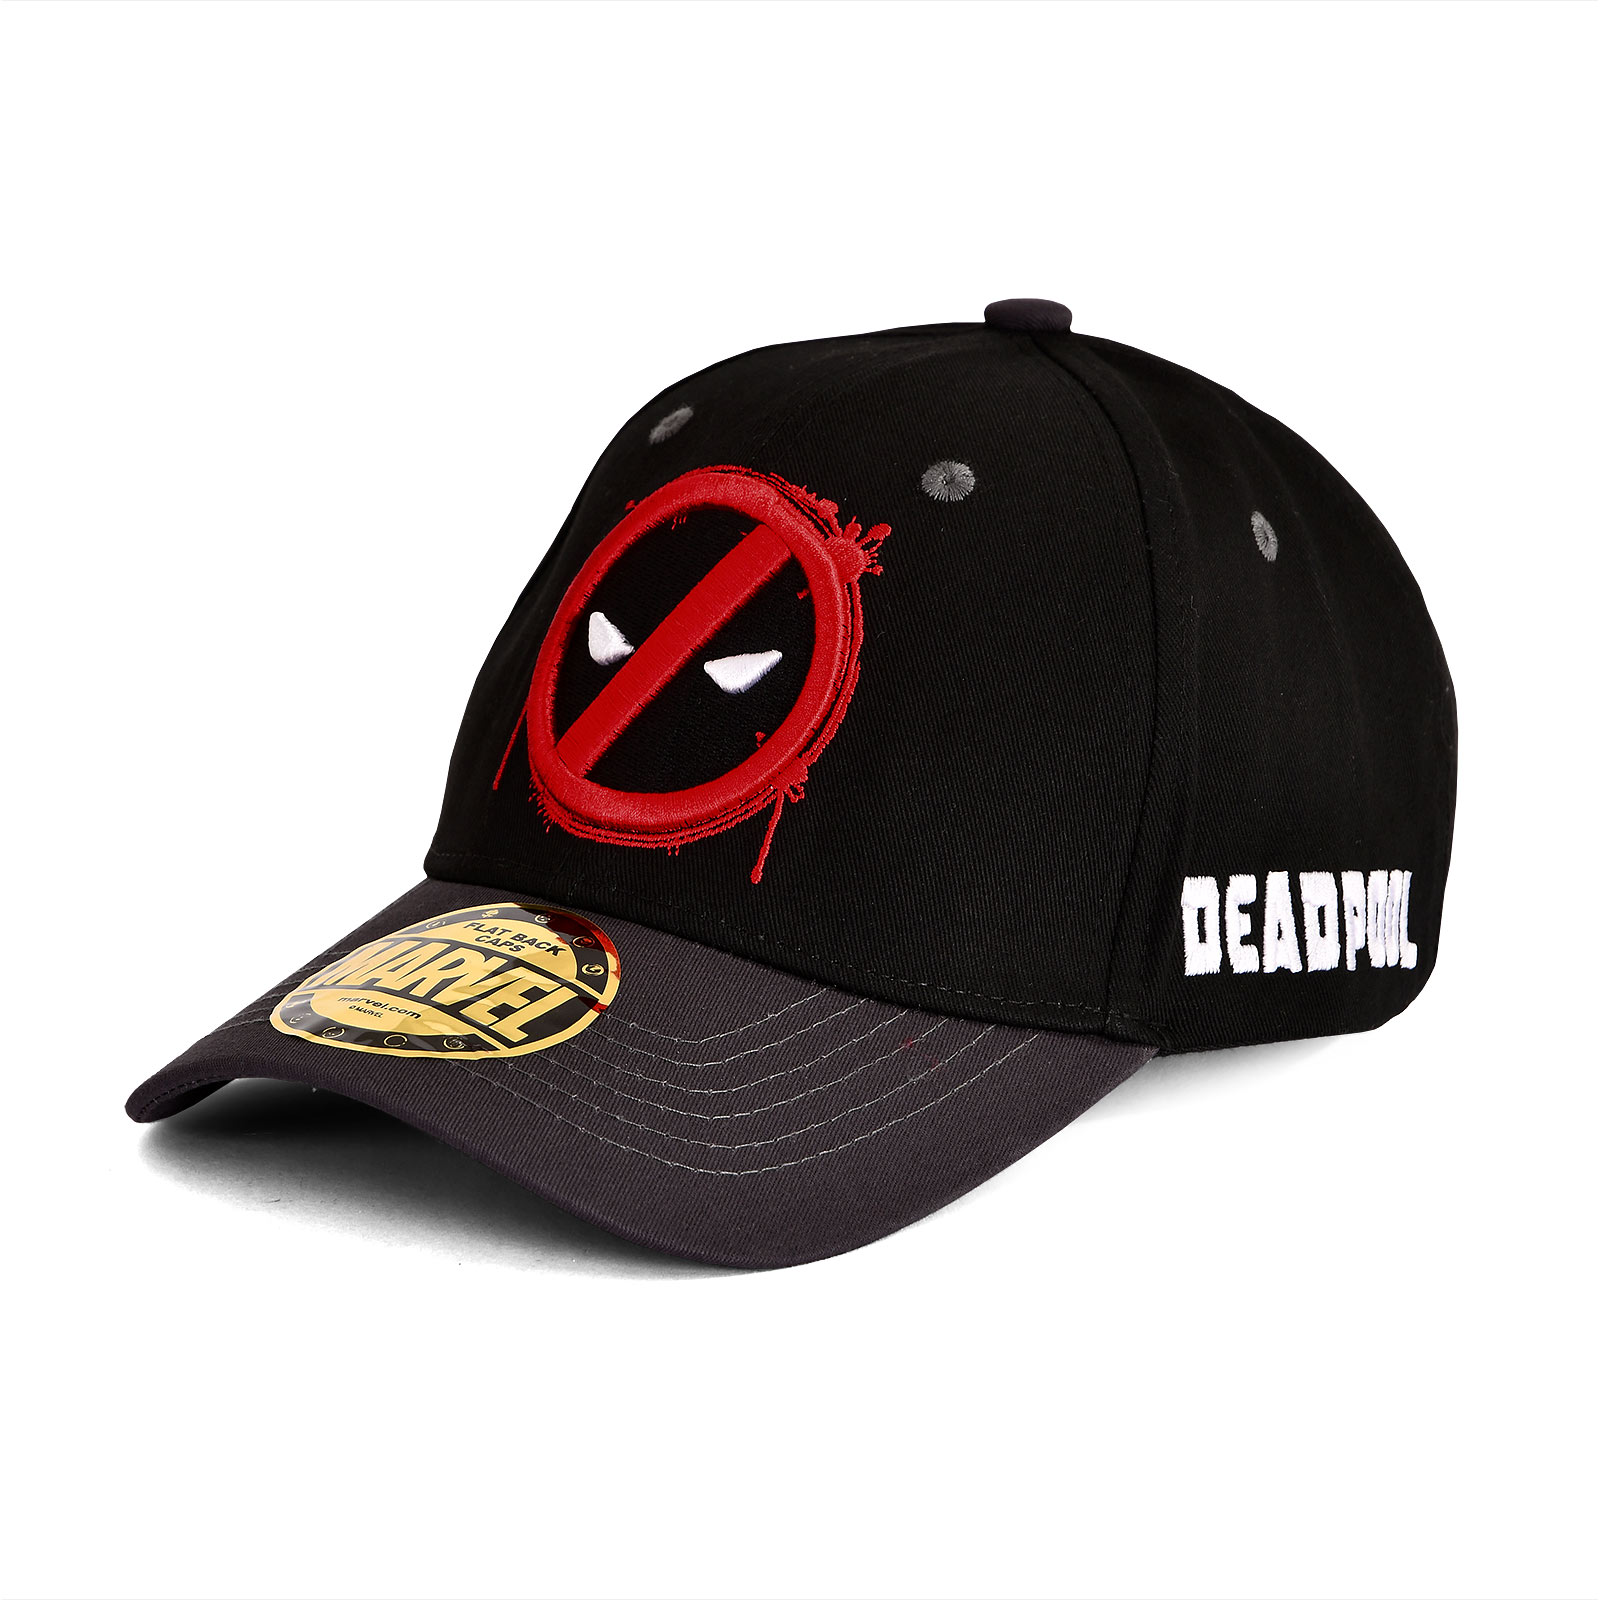 Deadpool - Keep Out Baseball Cap Black